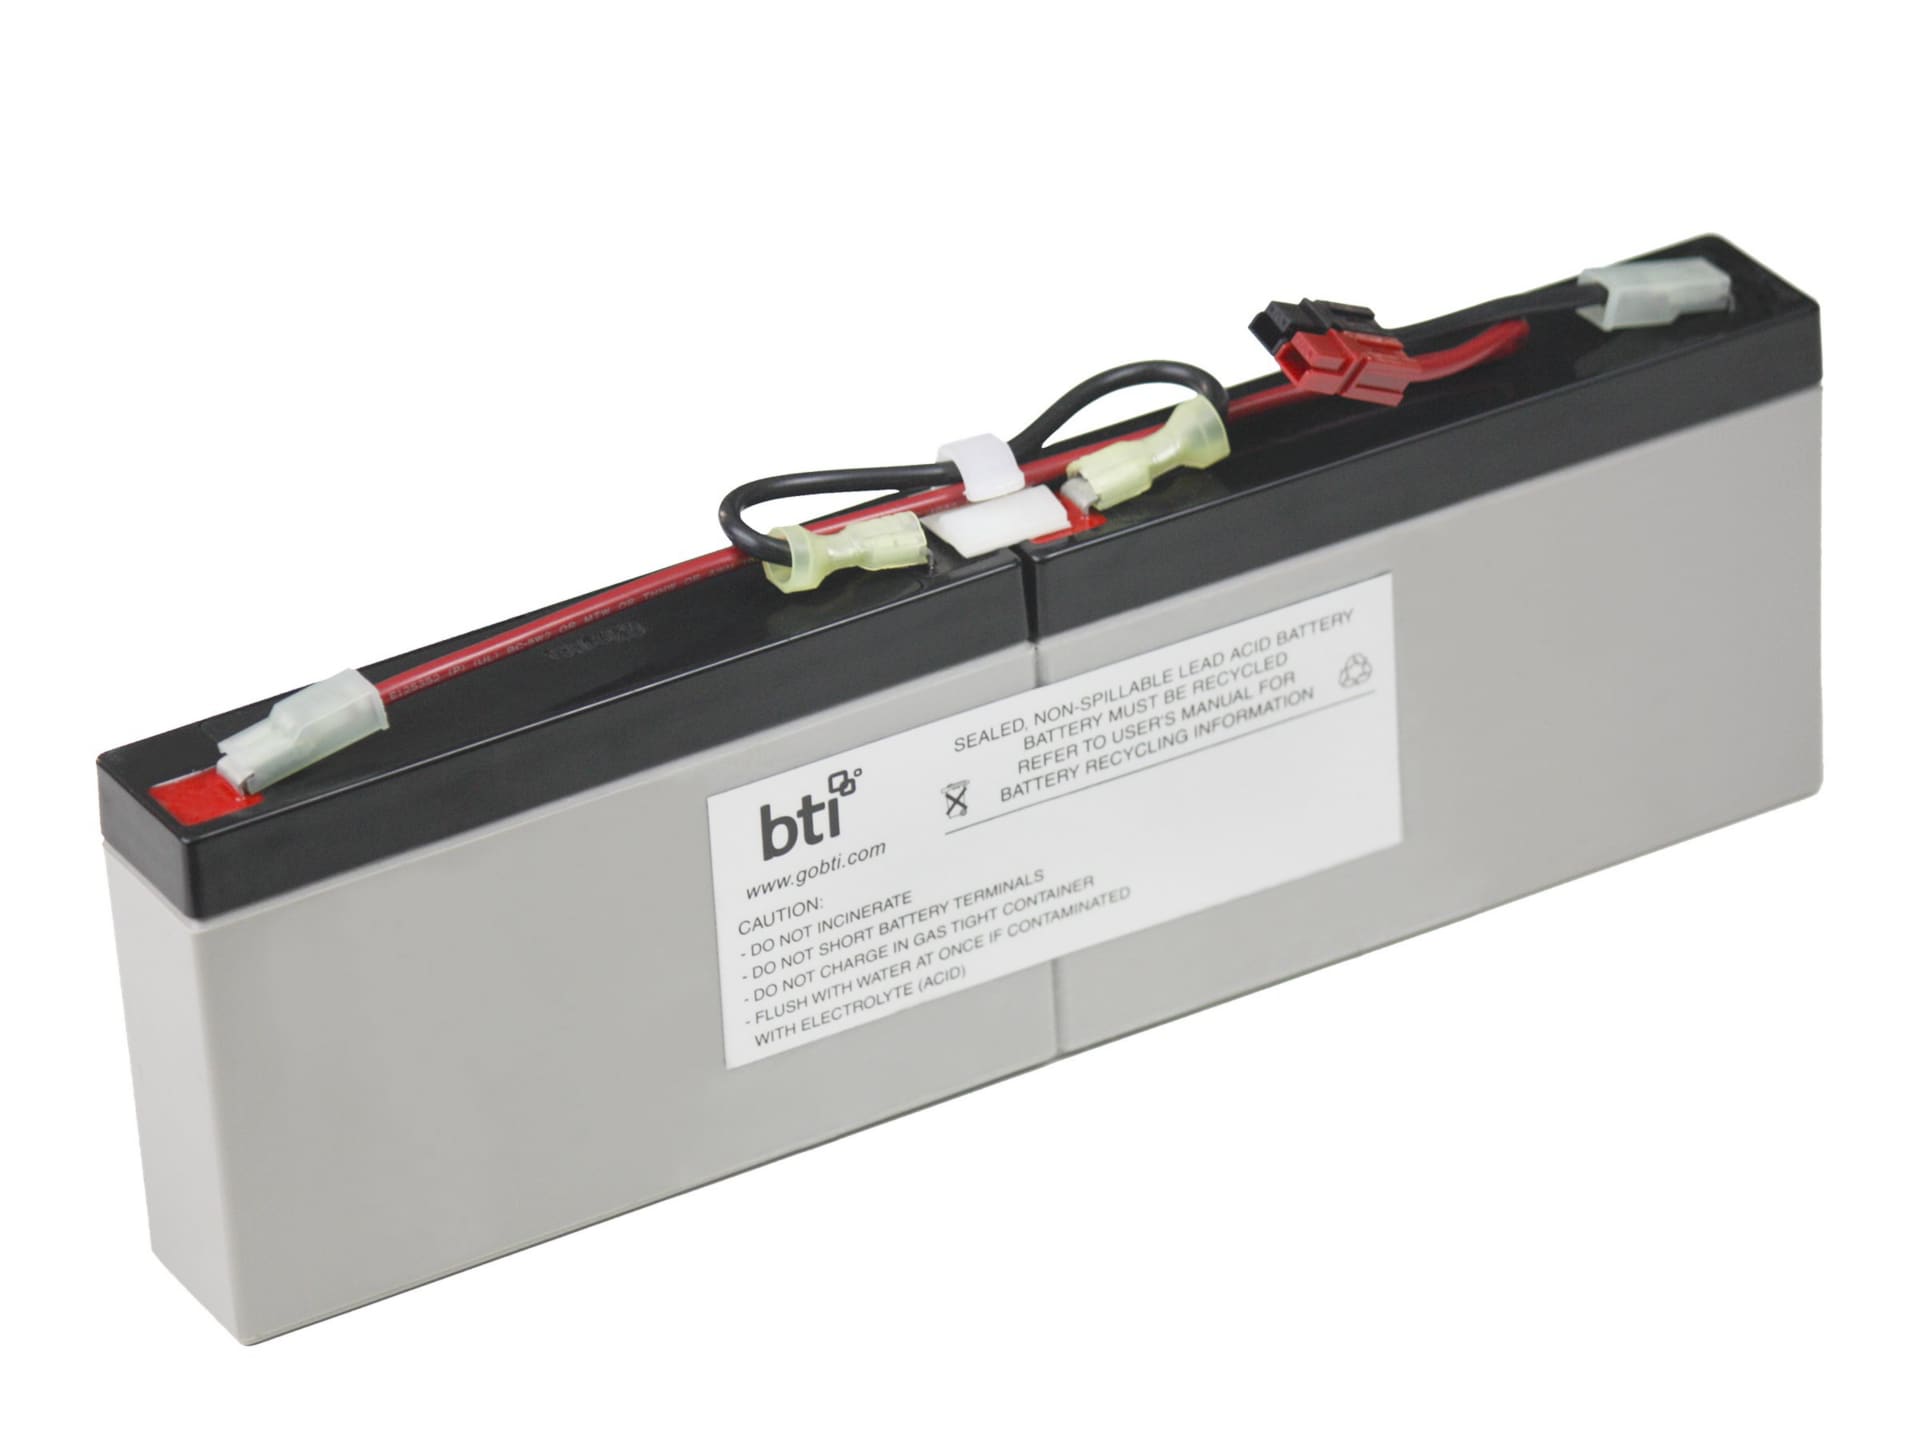 BTI RBC18 Compatible Lead Acid Battery for APC model replaces Cartridge #18